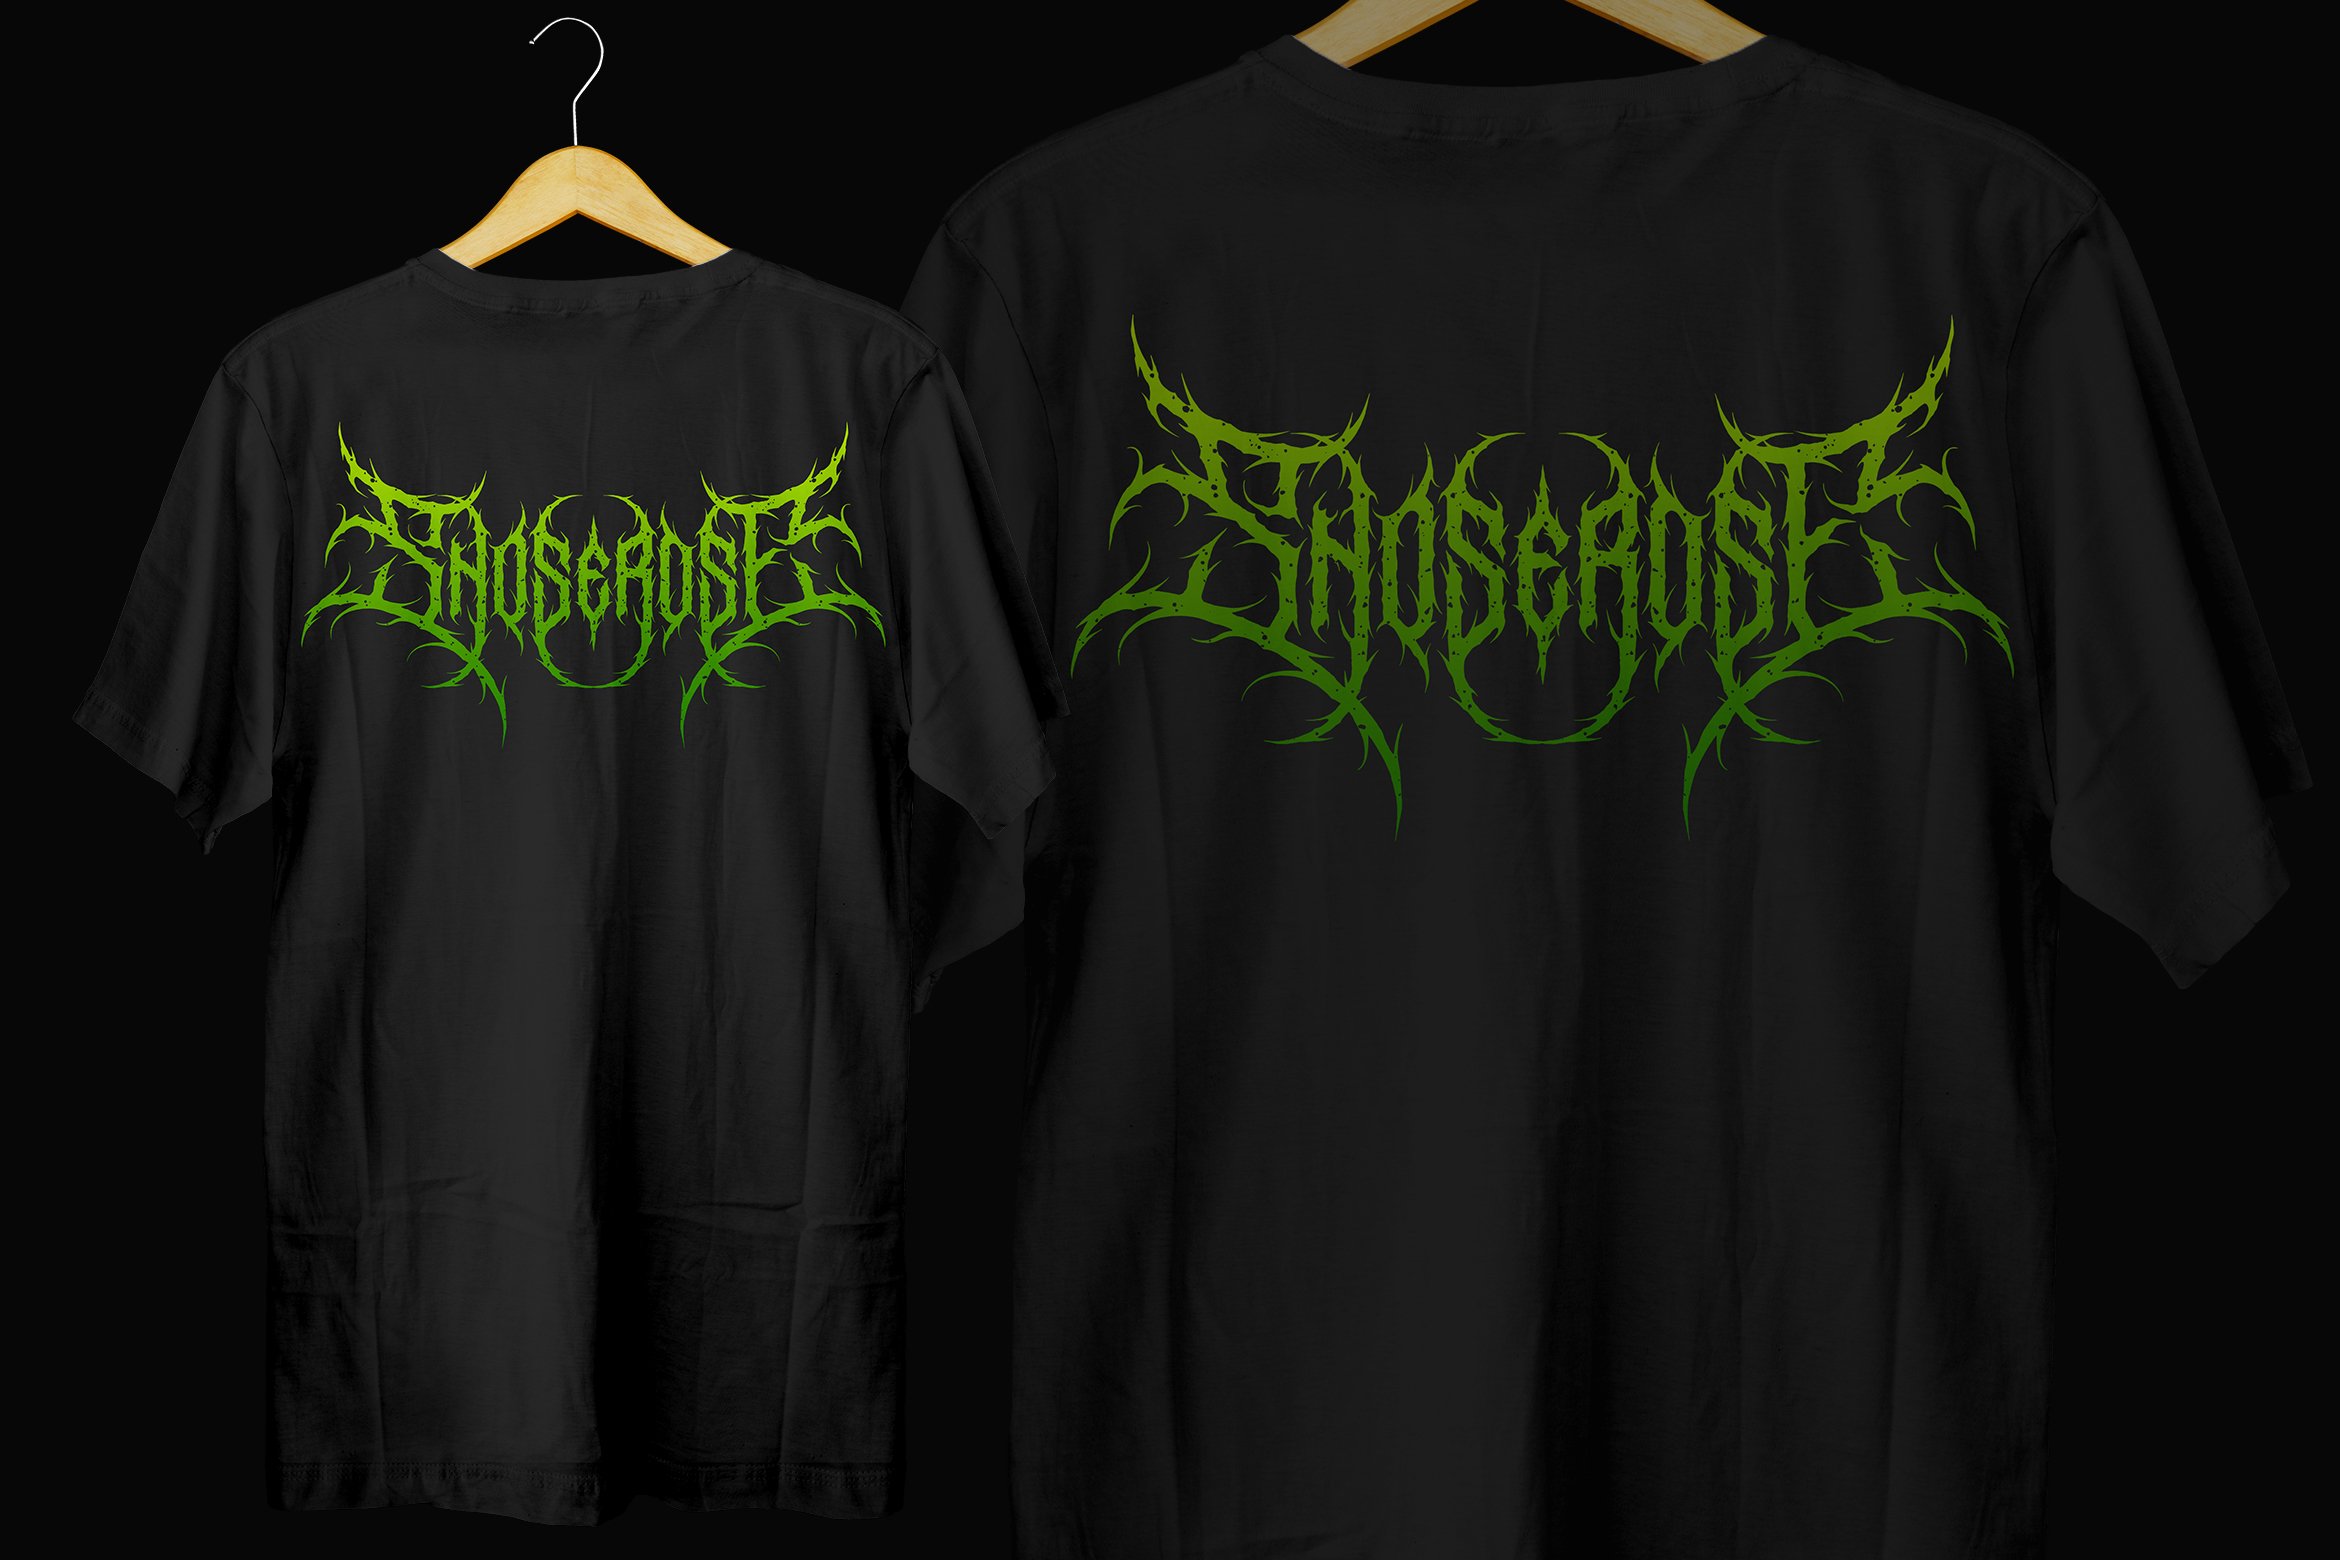 Snoserose | Black Metal Font Vol.7 preview image.